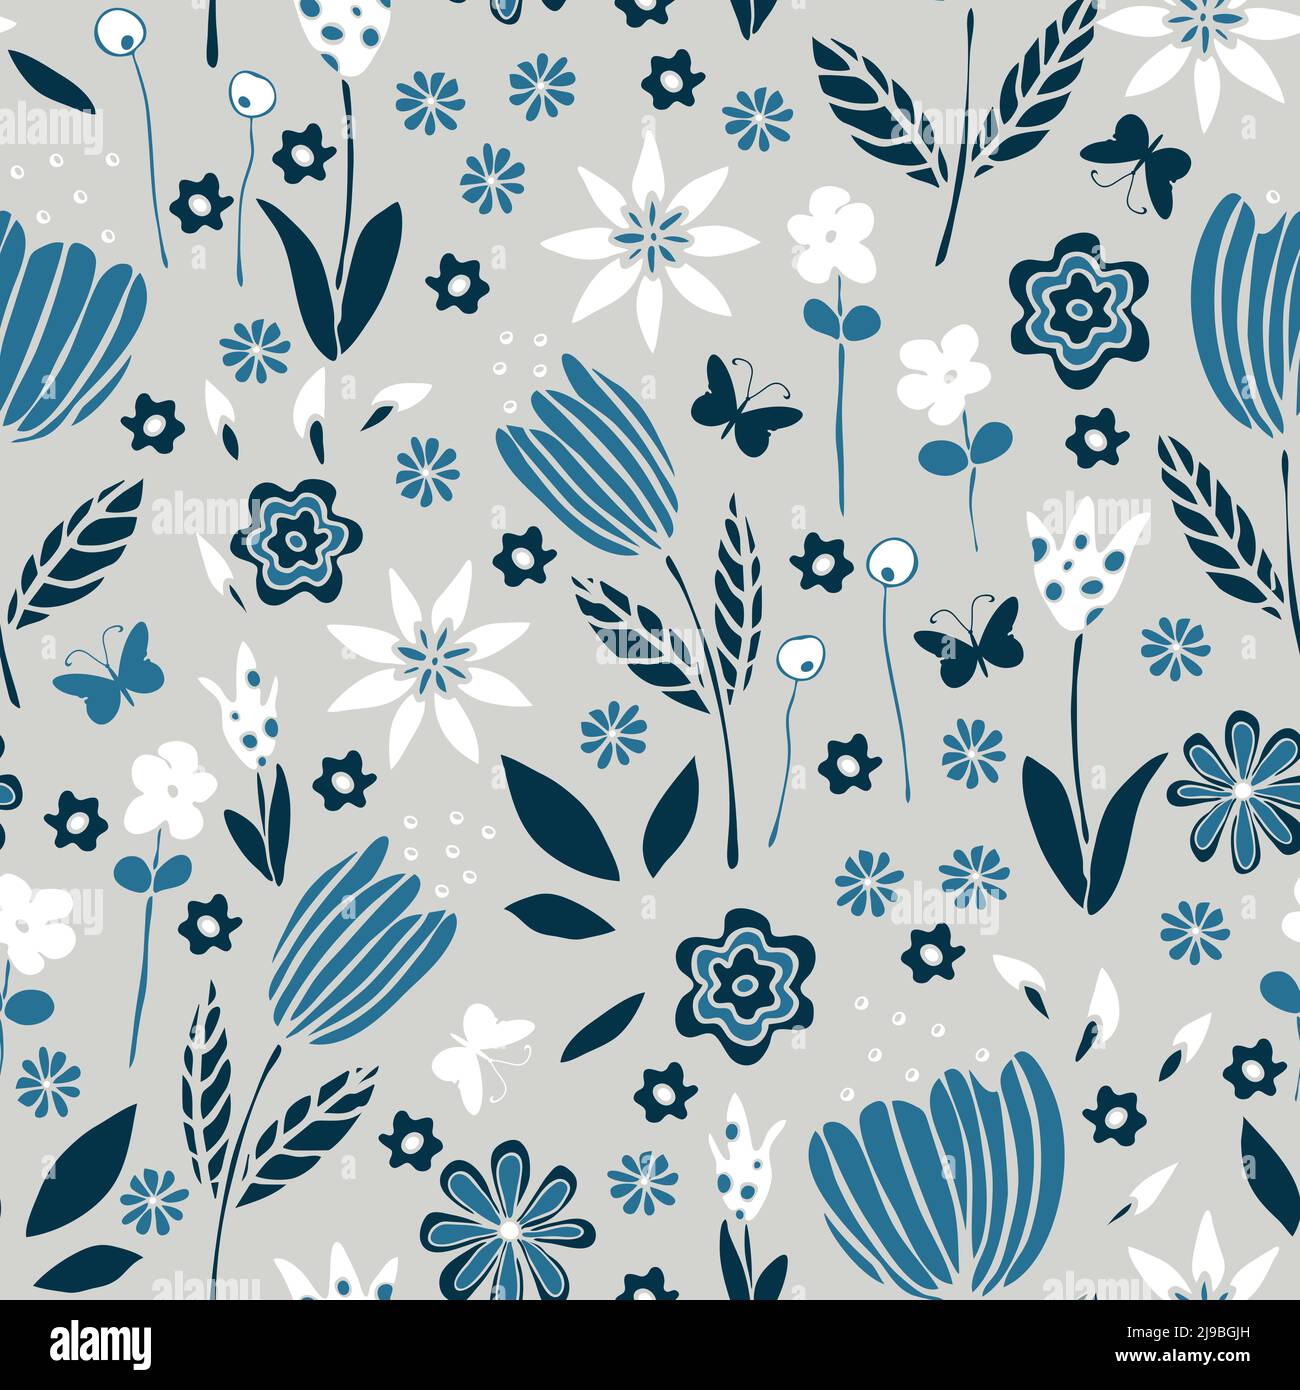 536359 Bright Vintage Floral Wallpaper Images Stock Photos  Vectors   Shutterstock